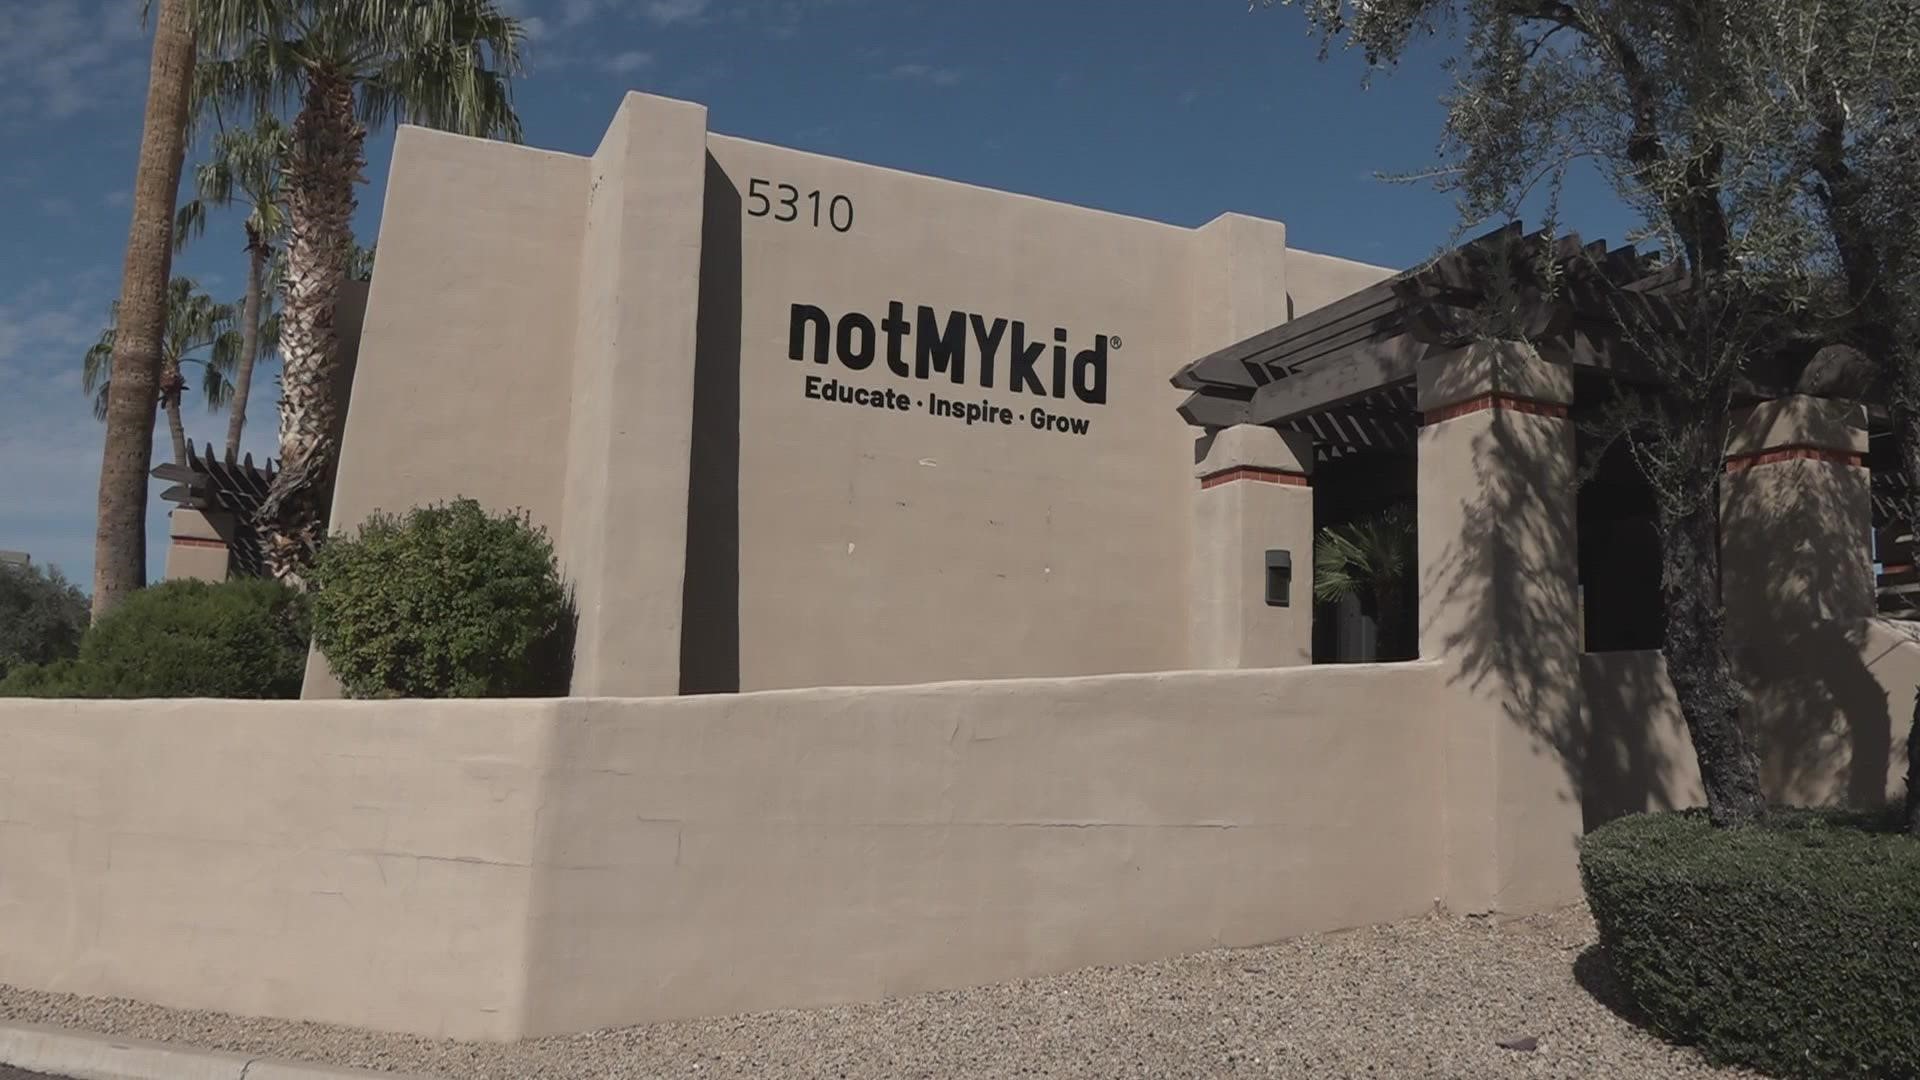 Nonprofits like notMYkid are battling the fentanyl crisis here in Arizona.